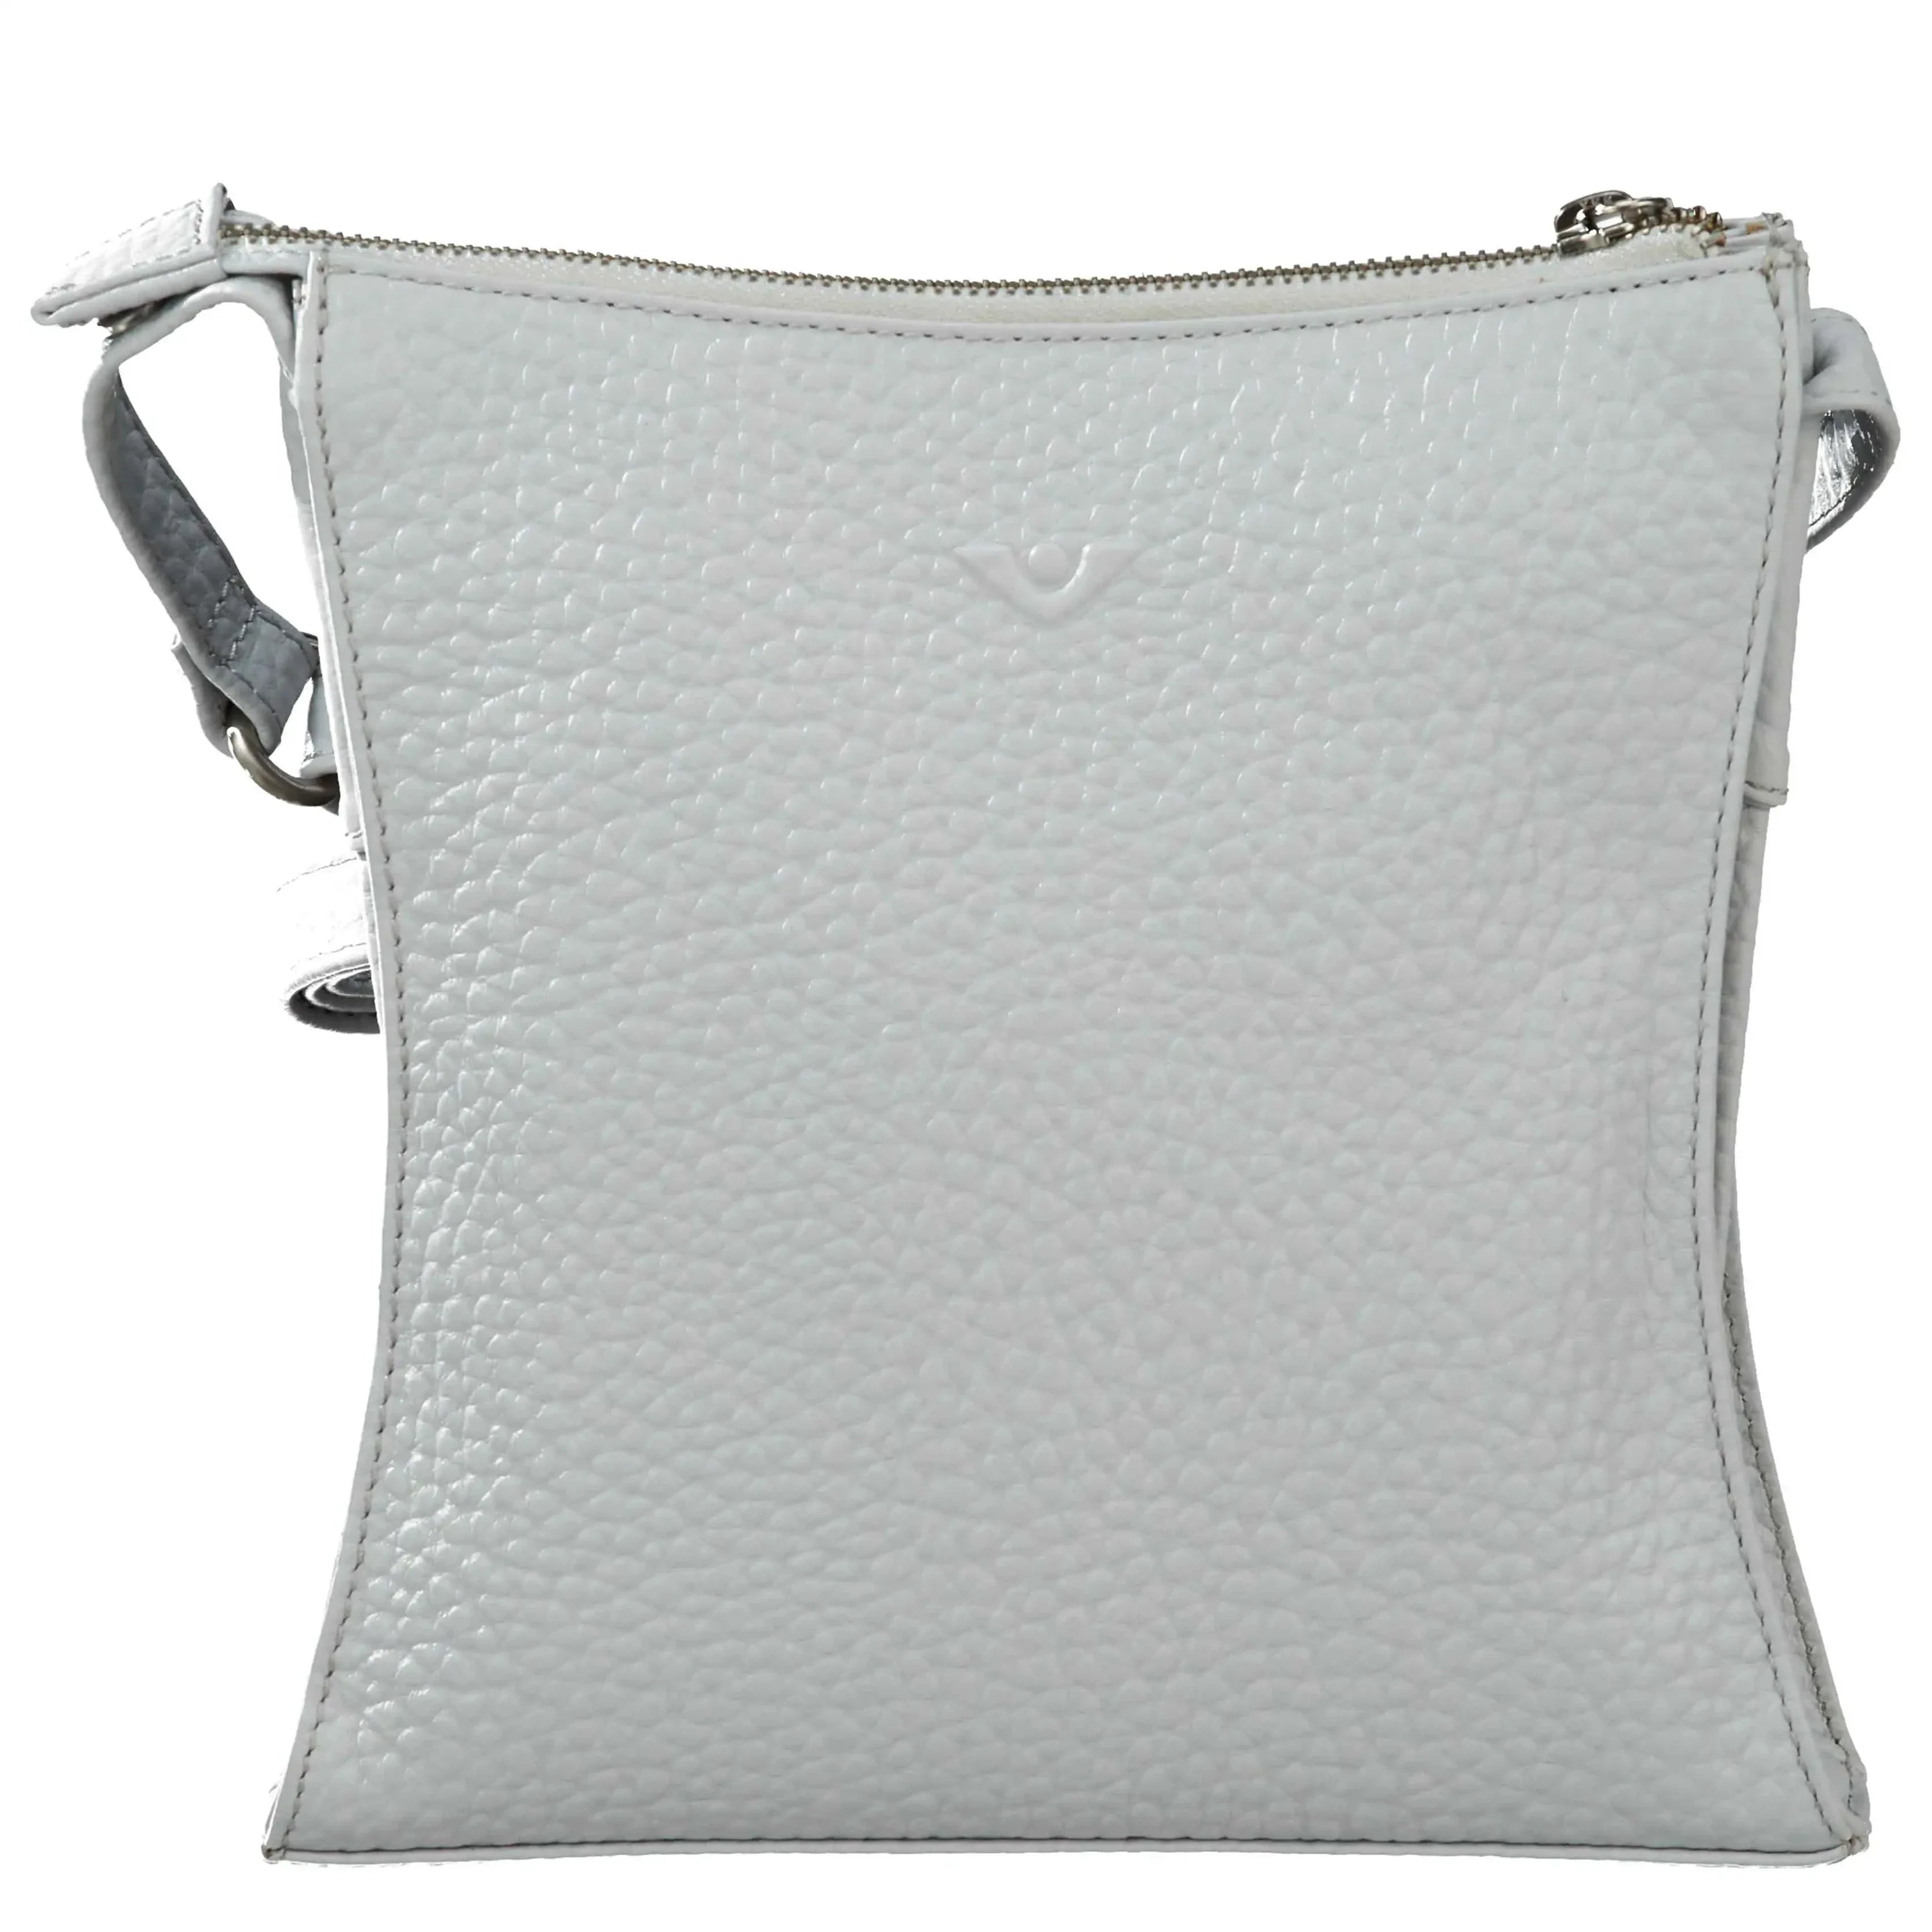 VOi-Design Hirsch Romina shoulder bag 23 cm - Platinum